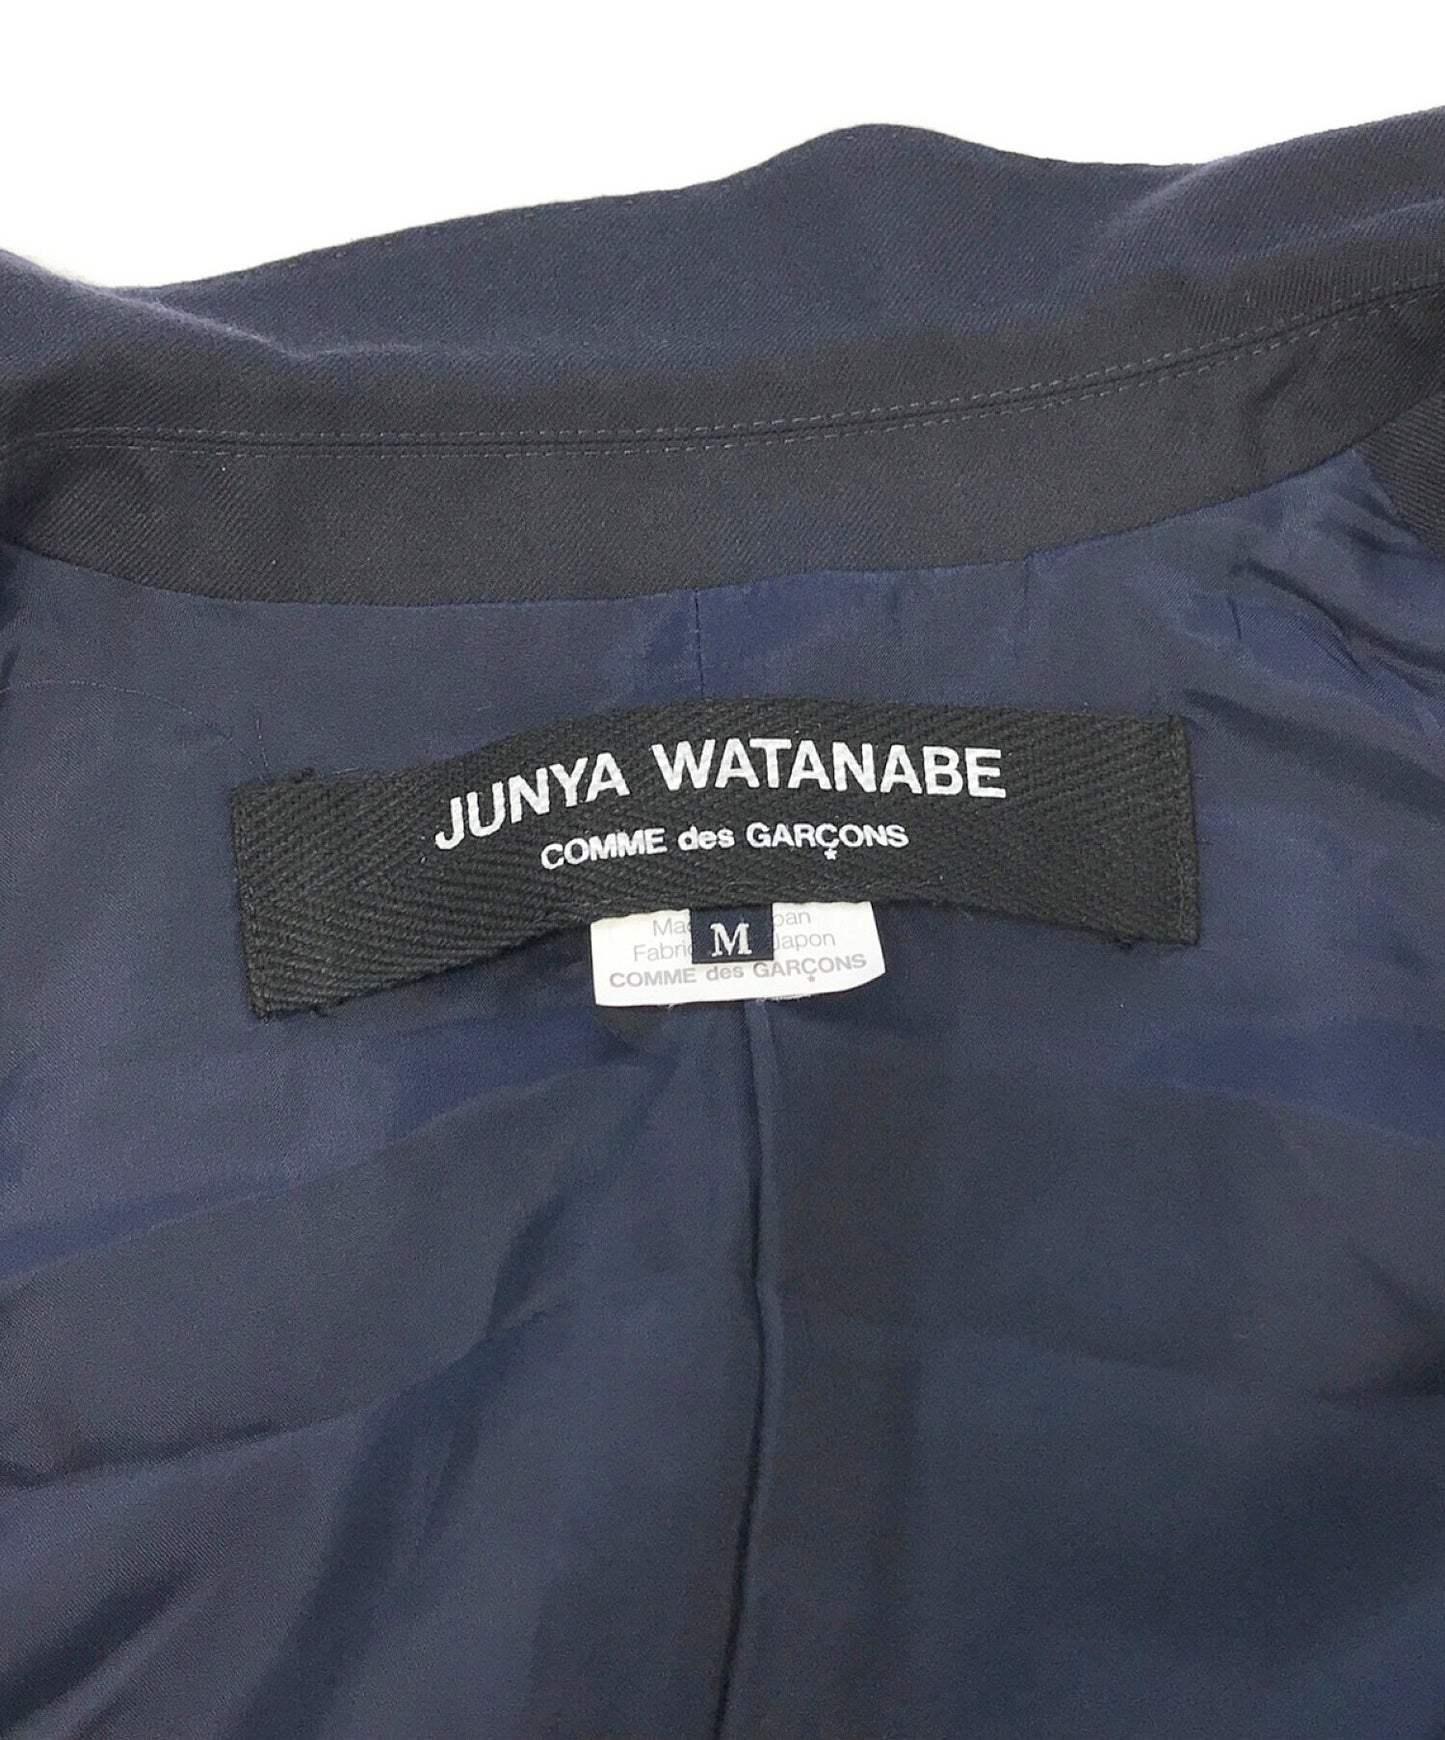 Comme des Garcons Junya Watanabe เปลี่ยนแจ็คเก็ตขนสัตว์ JJ-J005